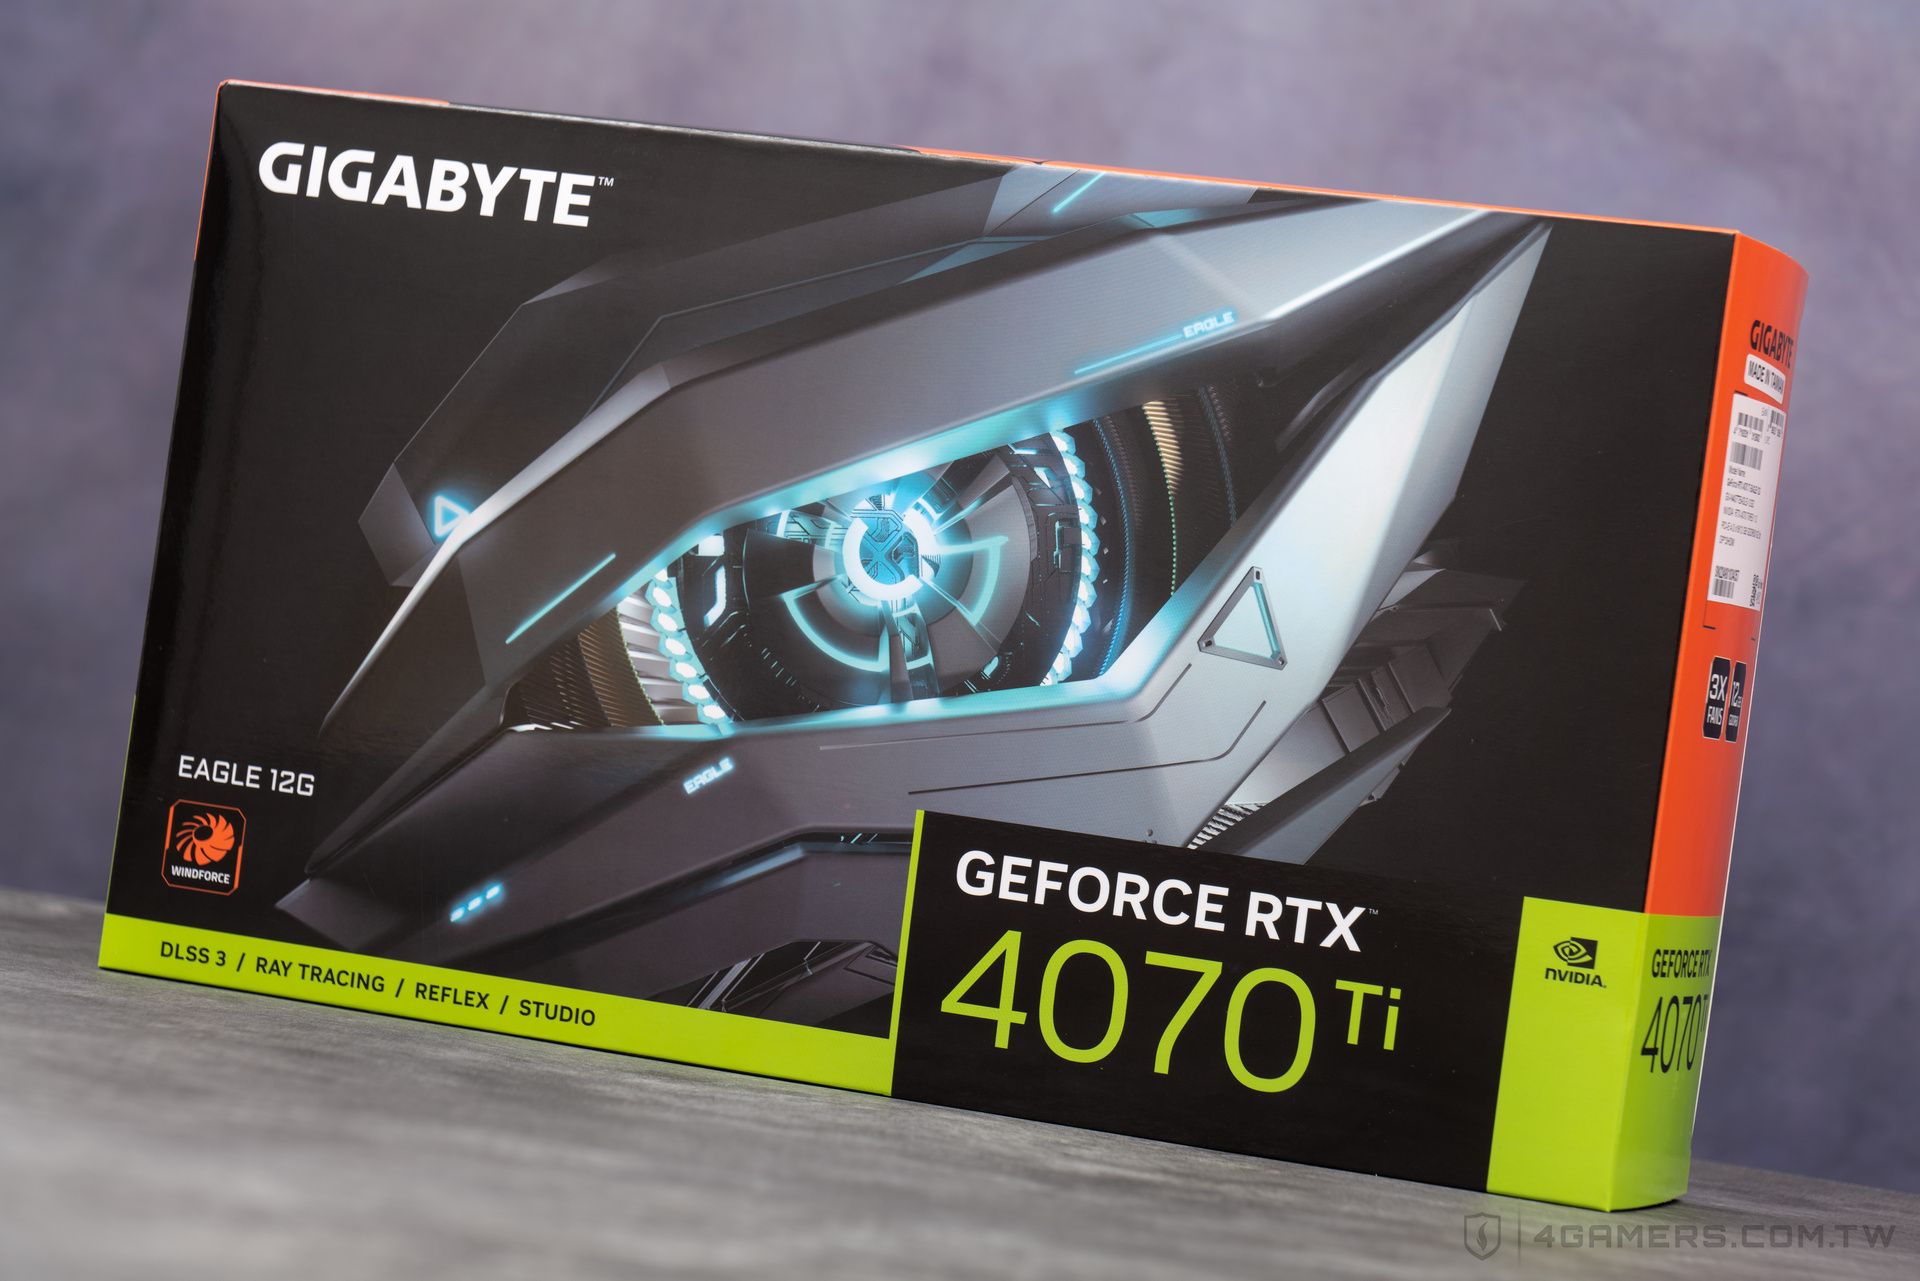 GIGABYTE GeForce RTX 4070 Ti Eagle